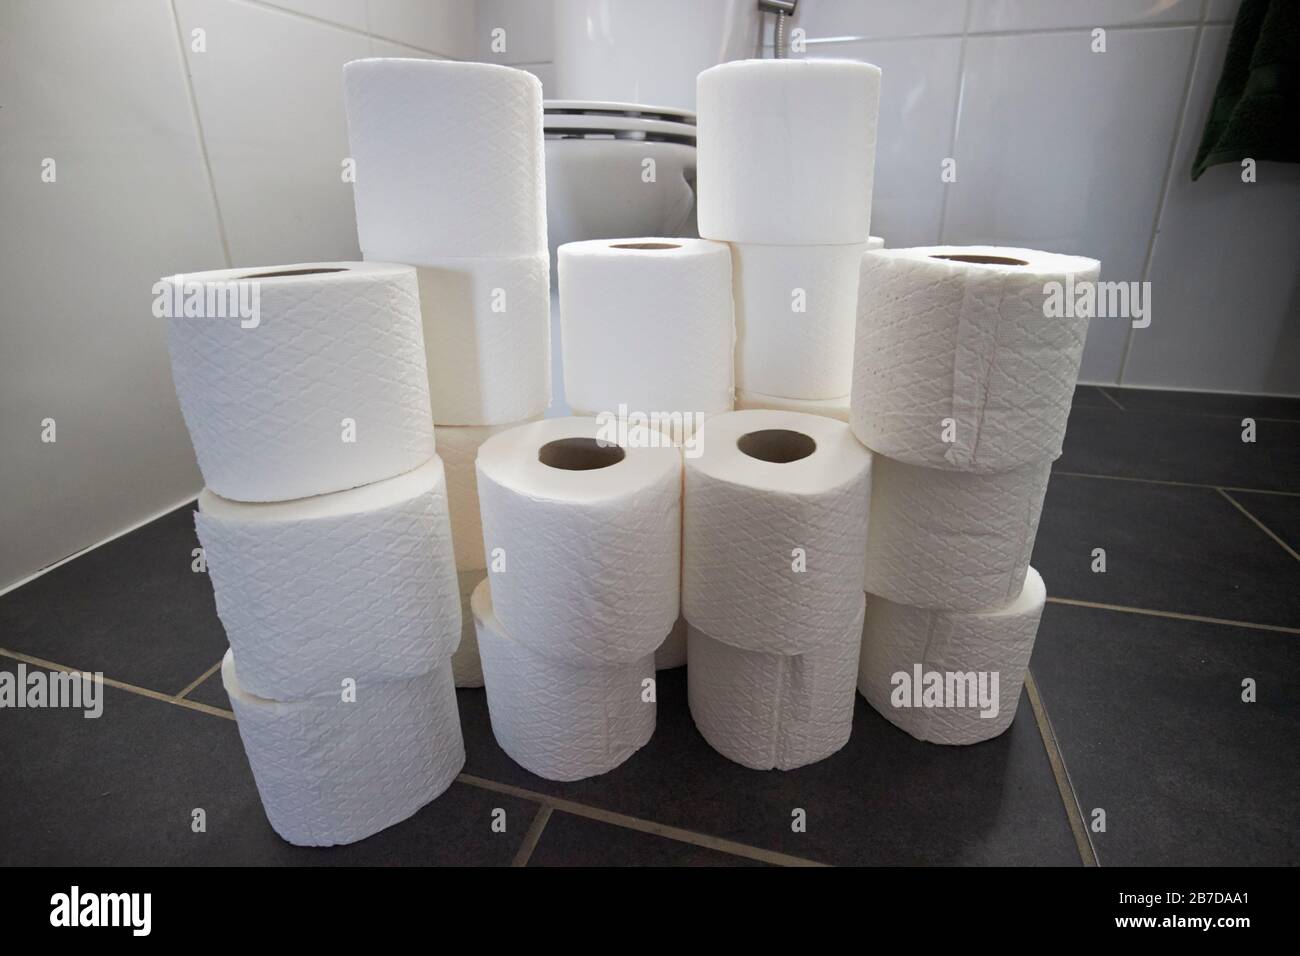 stockpile of toilet rolls in bathroom due to panic buying stockpiling due to coronavirus outbreak Stock Photo